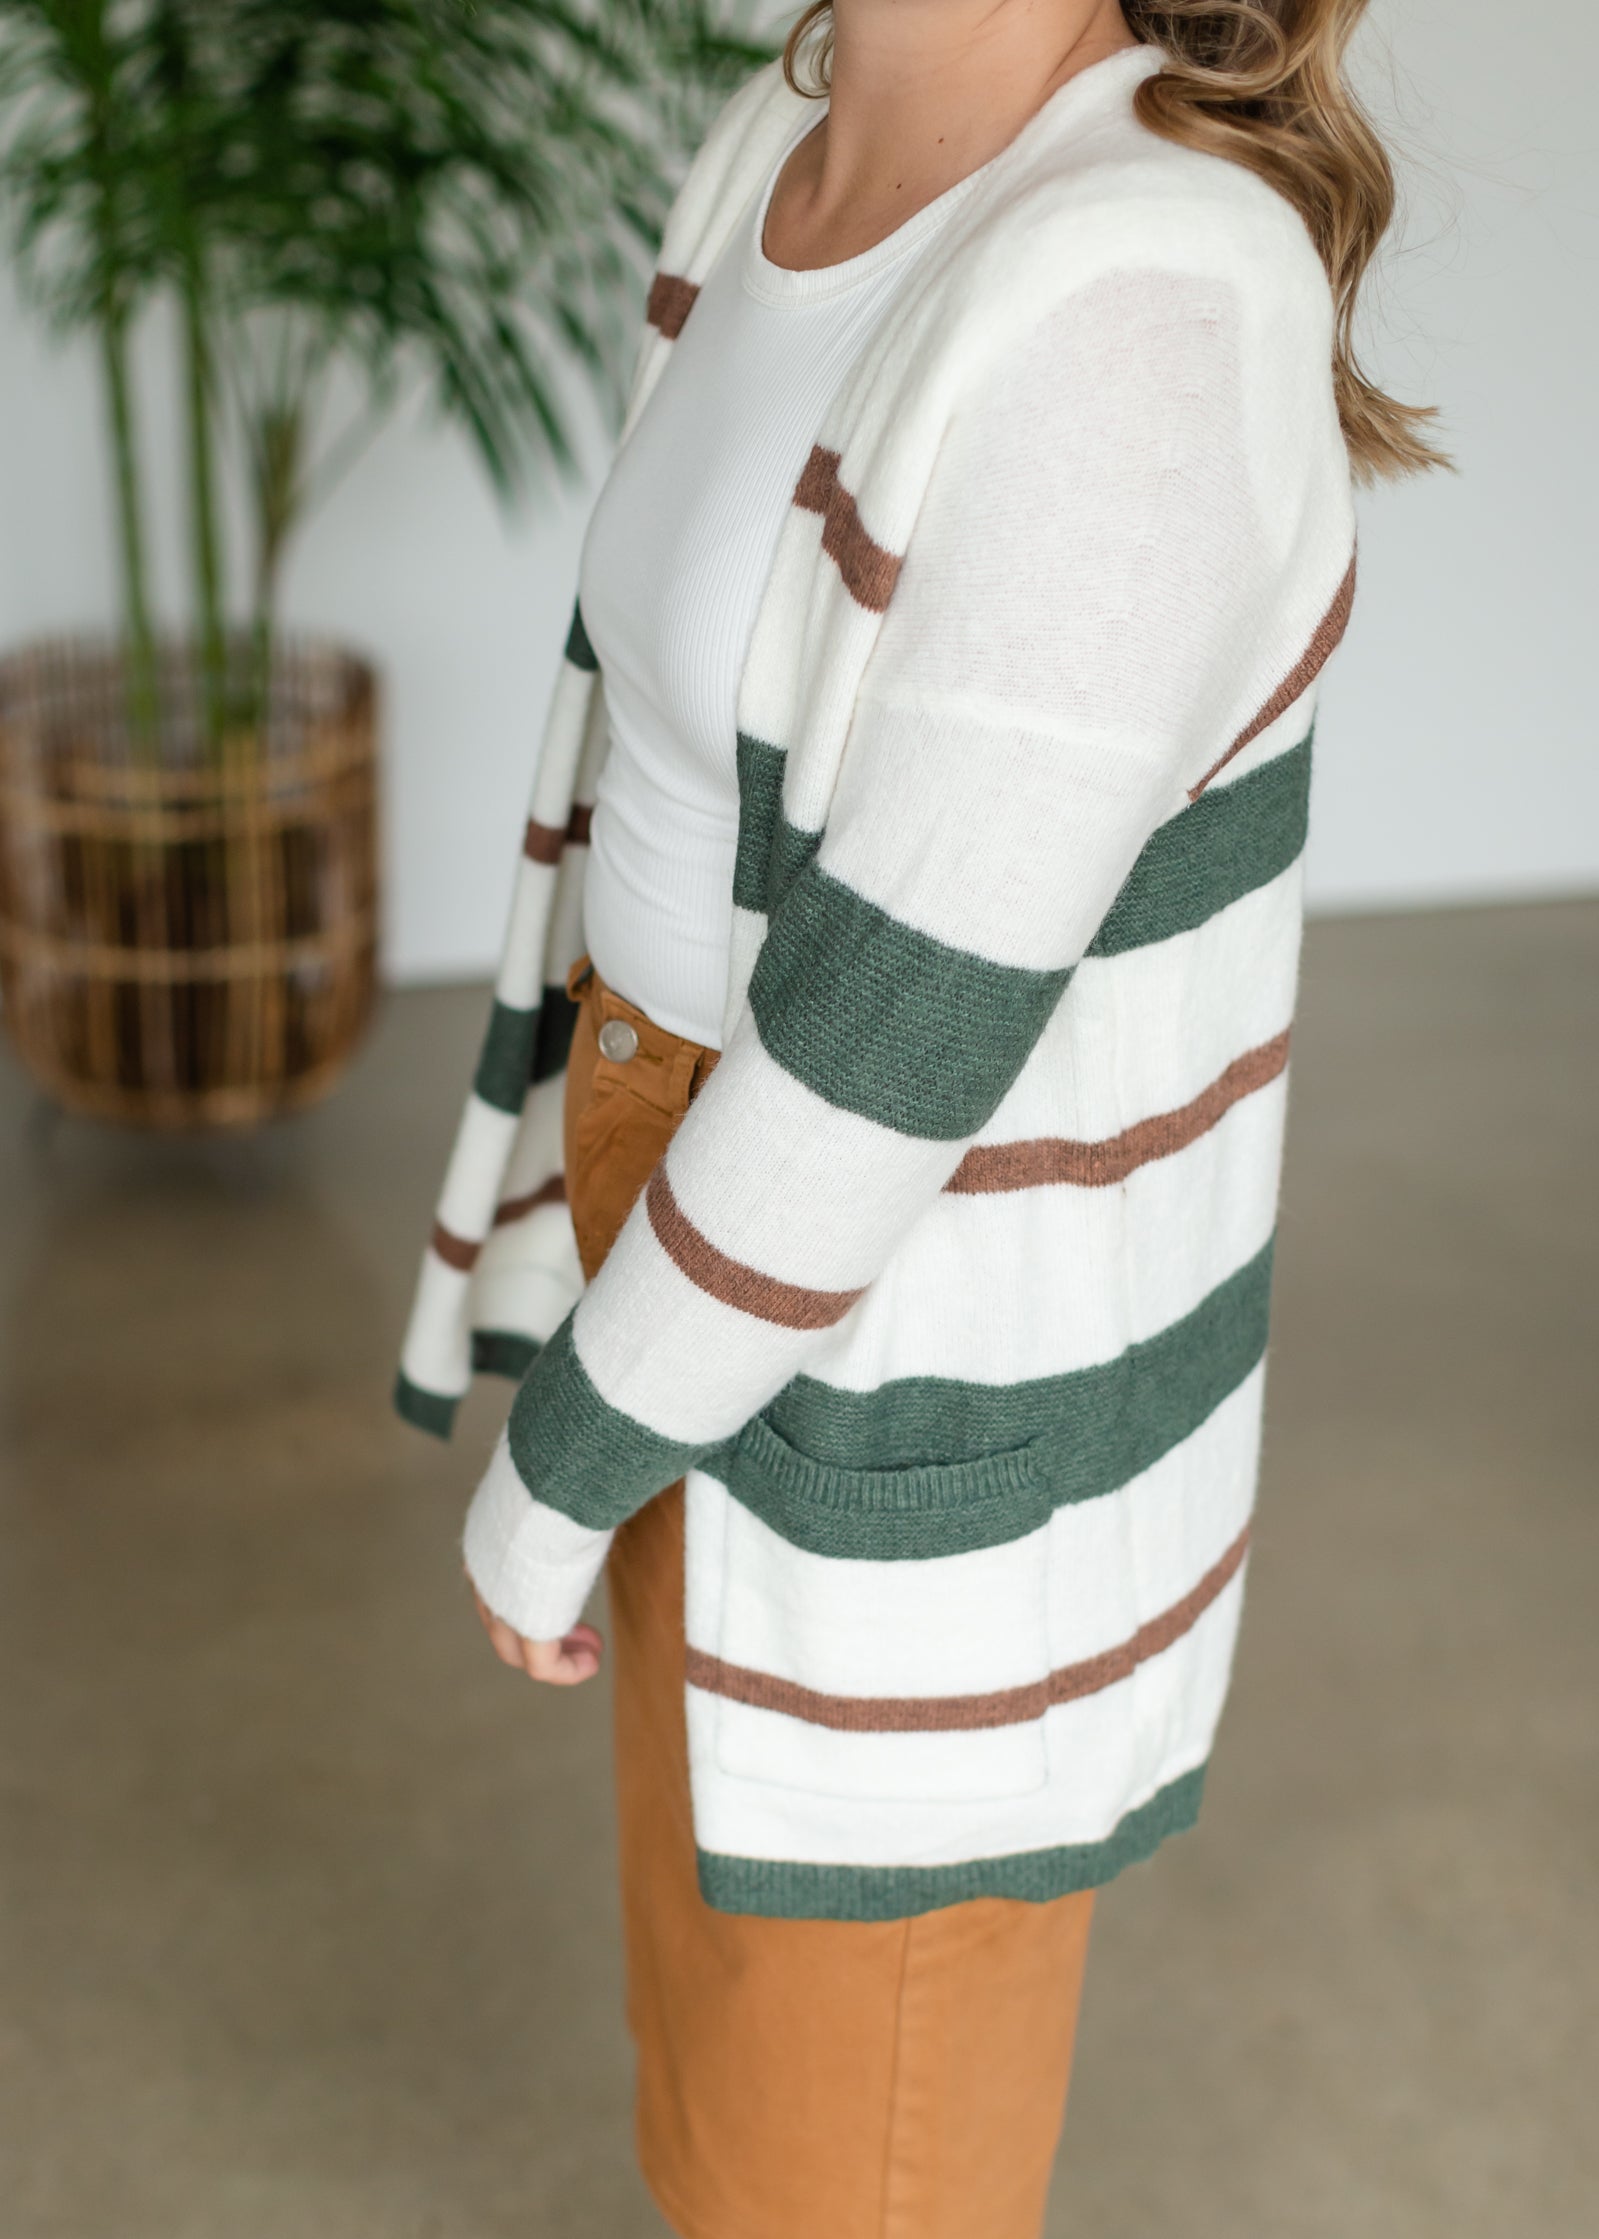 Multi Stripe Cardigan With Pockets - FINAL SALE Tops